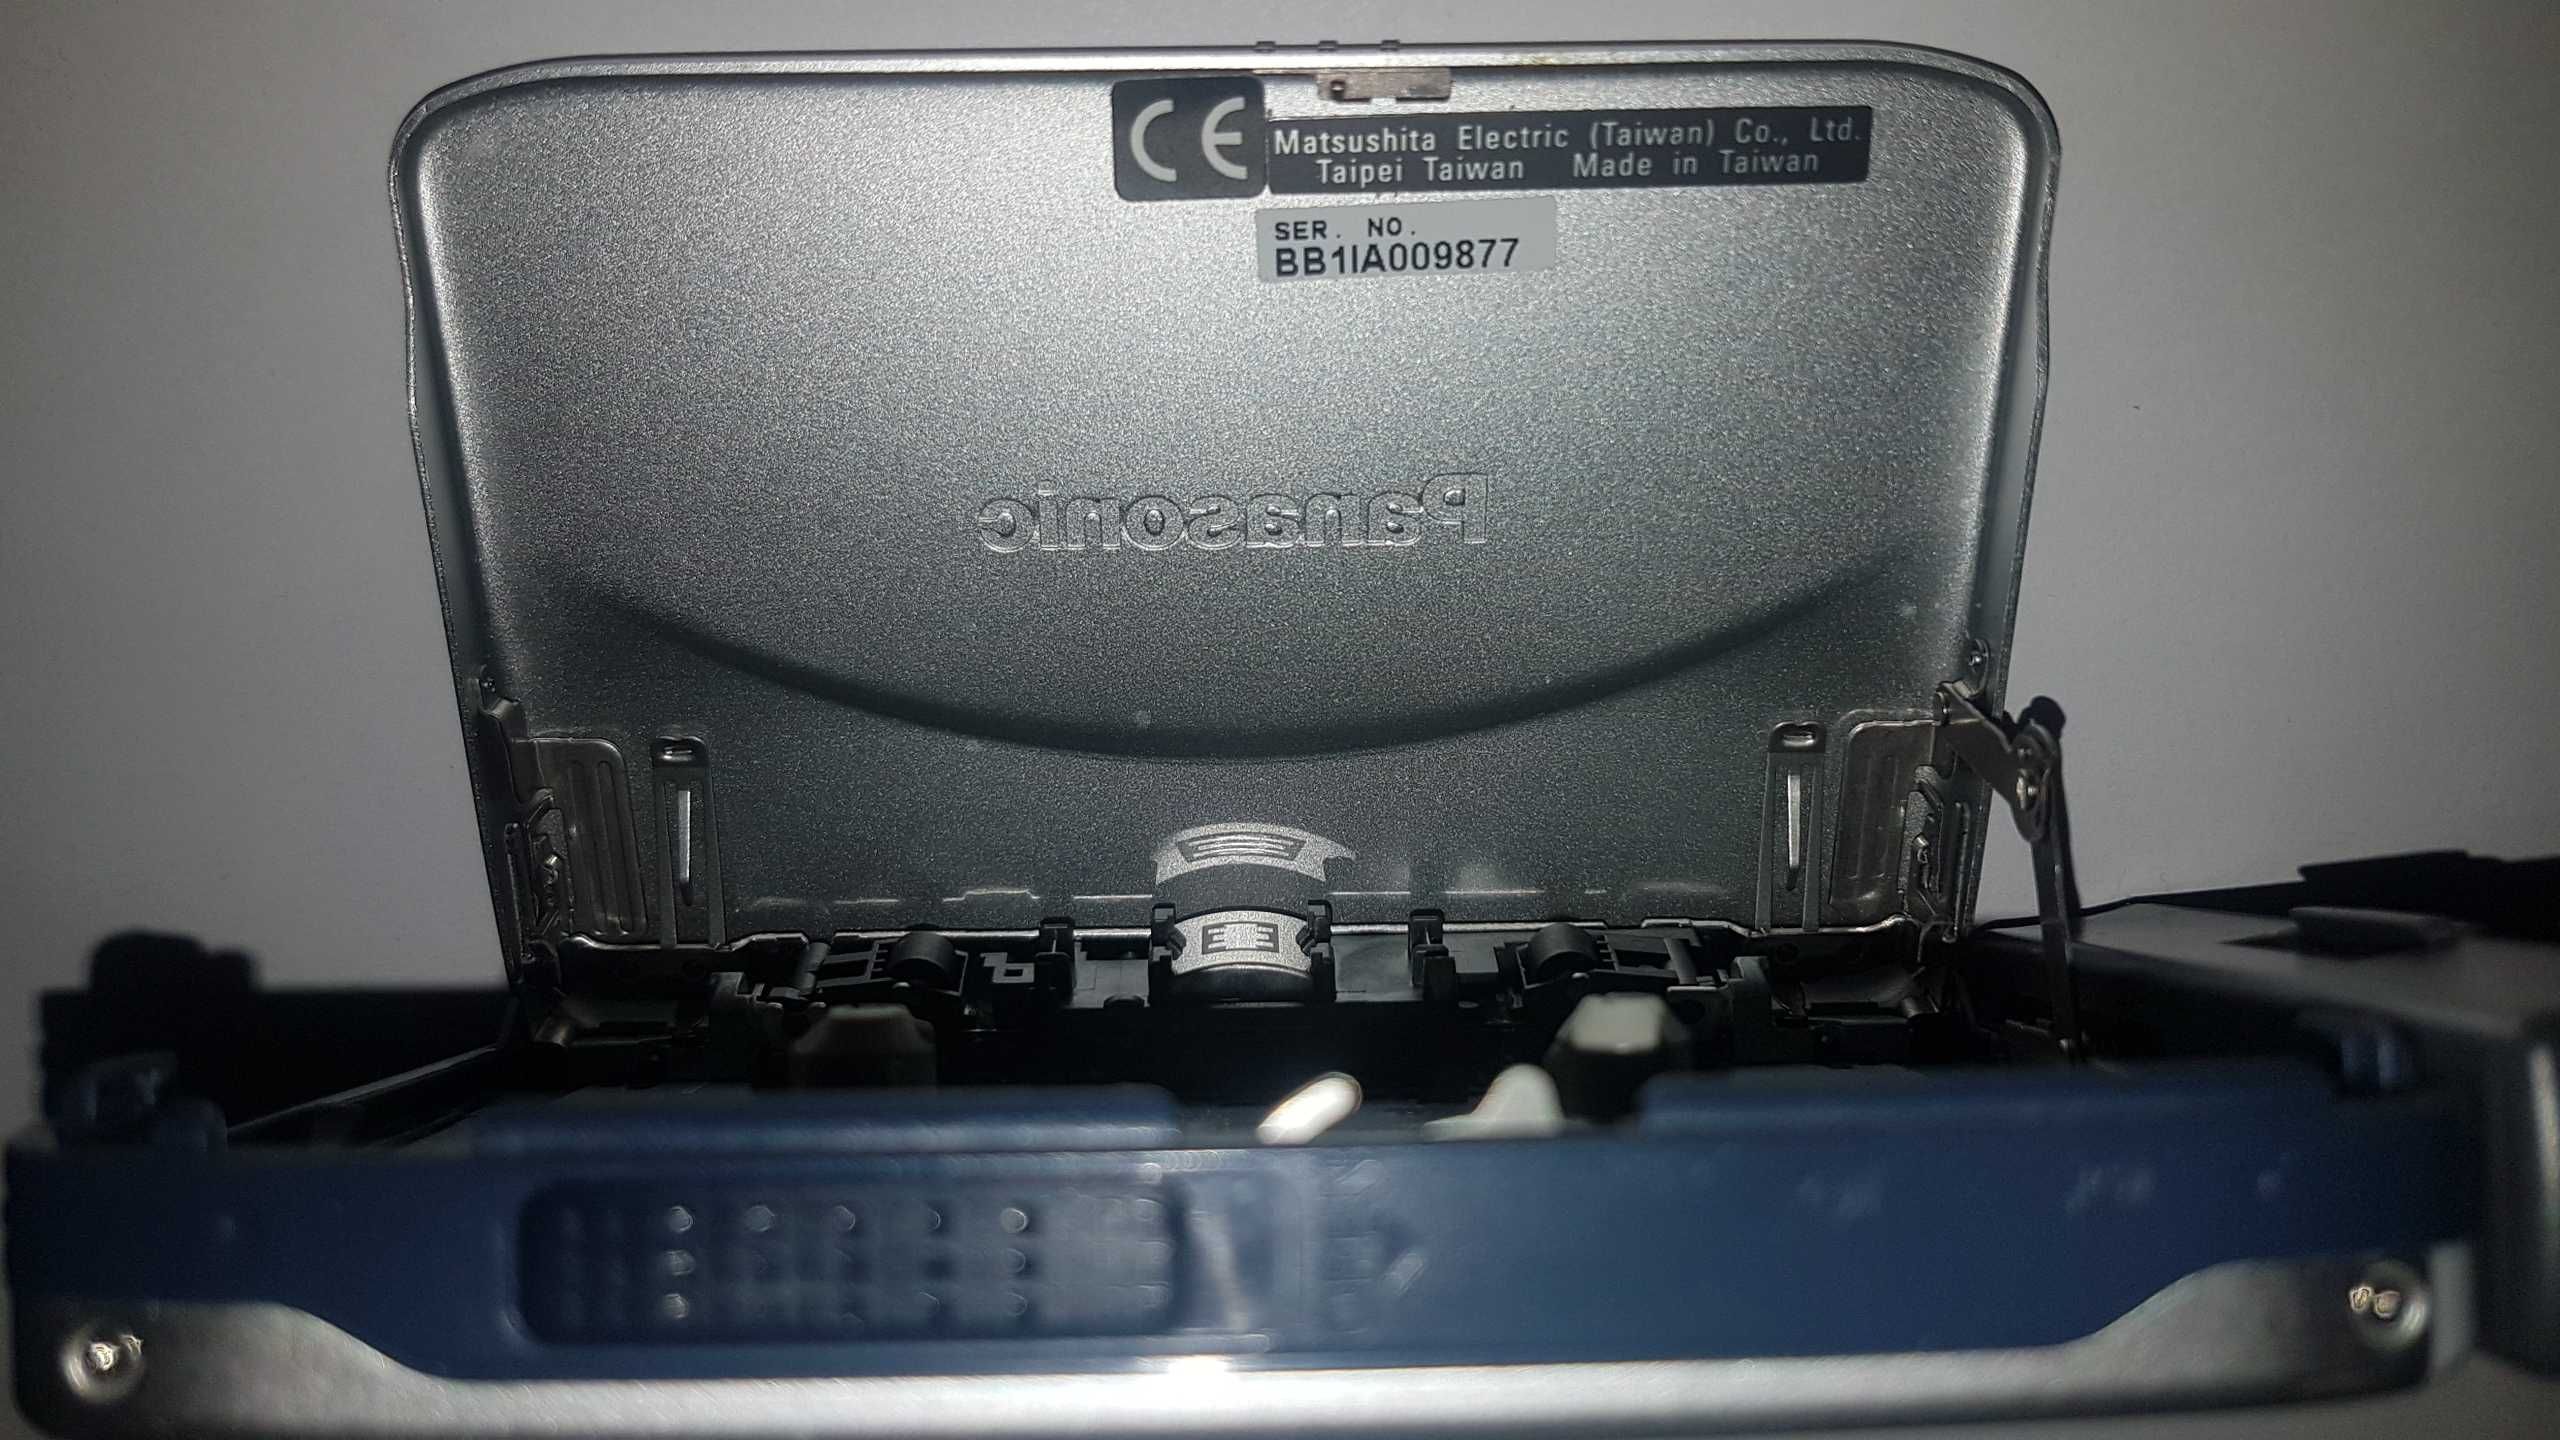 Кассетный проигрыватель Panasonic RQ-SX 52 made in Japan/Taiwan